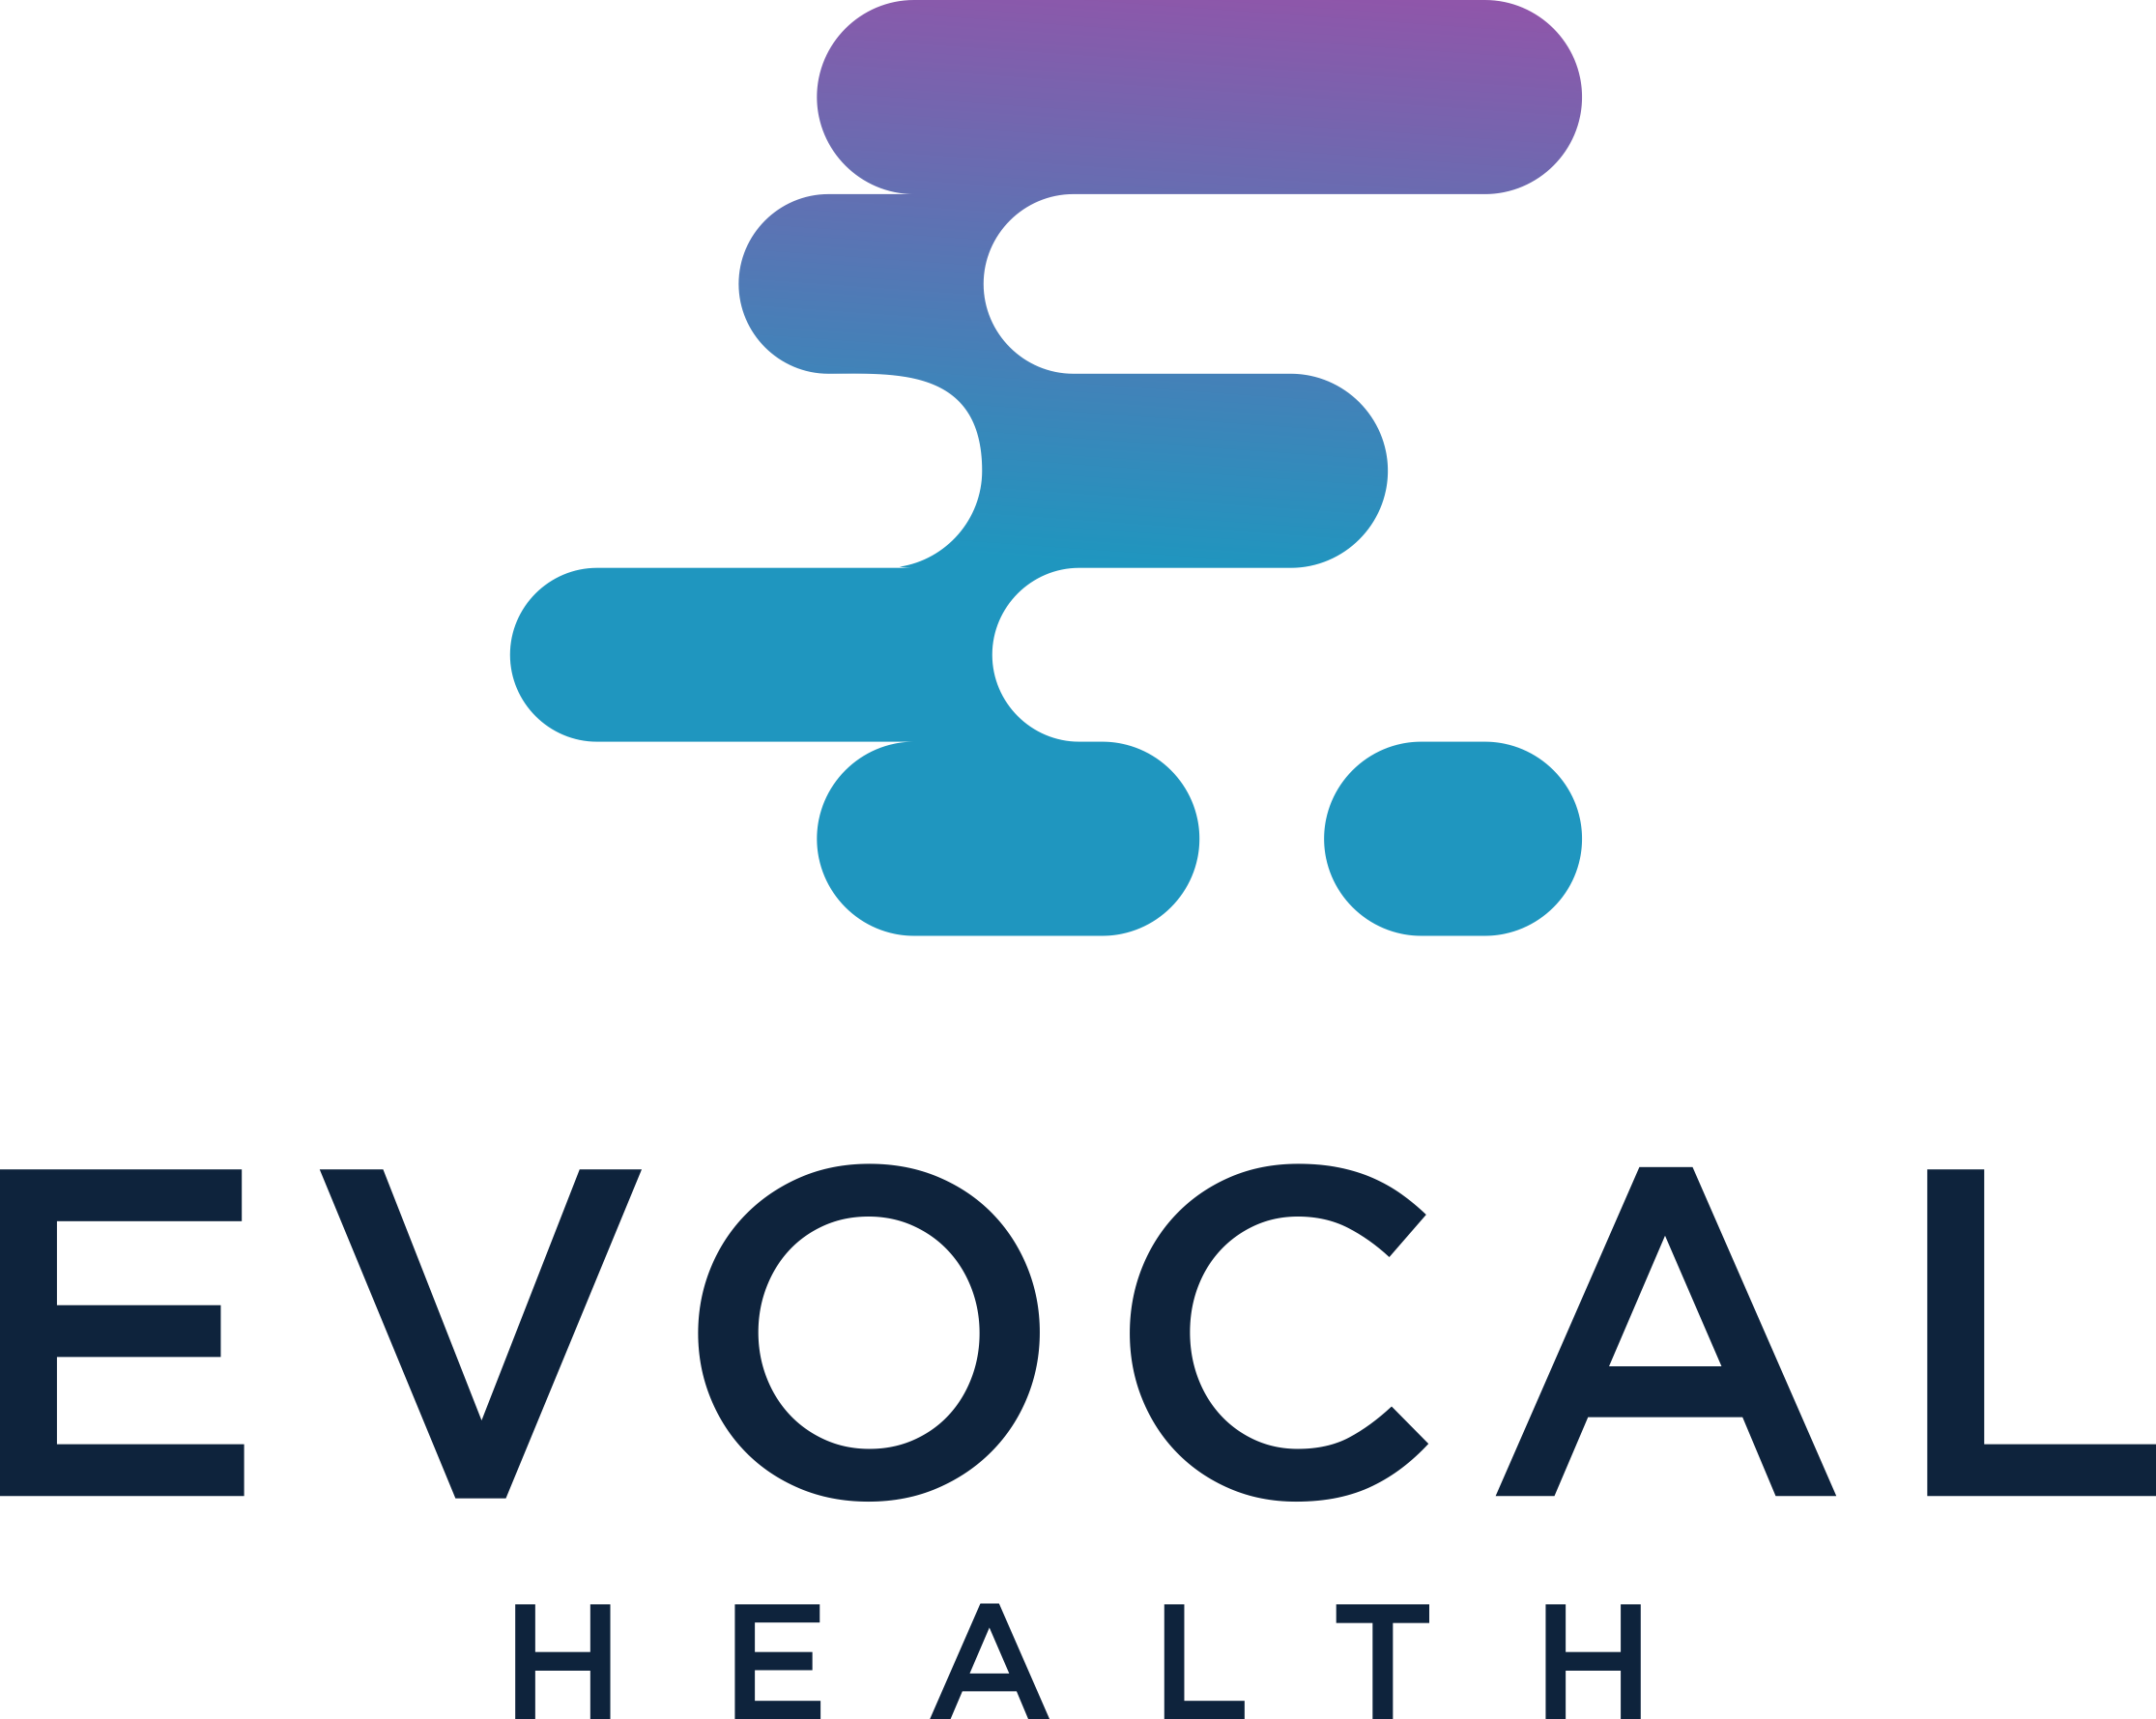 EVOCAL Health